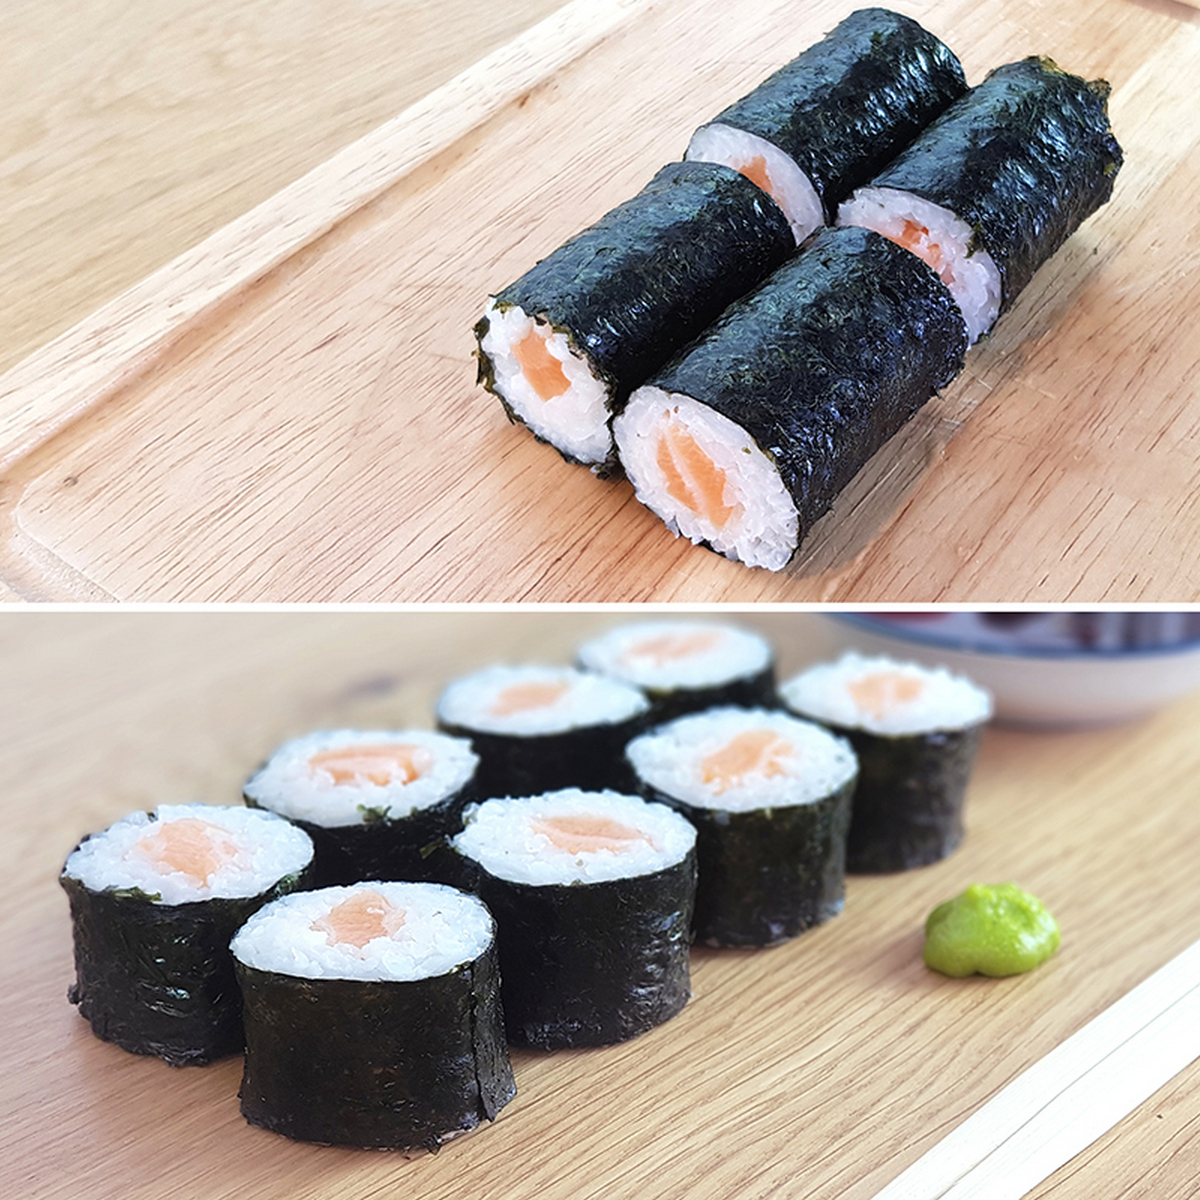 cookut coffret-sushi-maki-faciles ustensile de cuisine une idee cadeau chez ugo et lea (14)